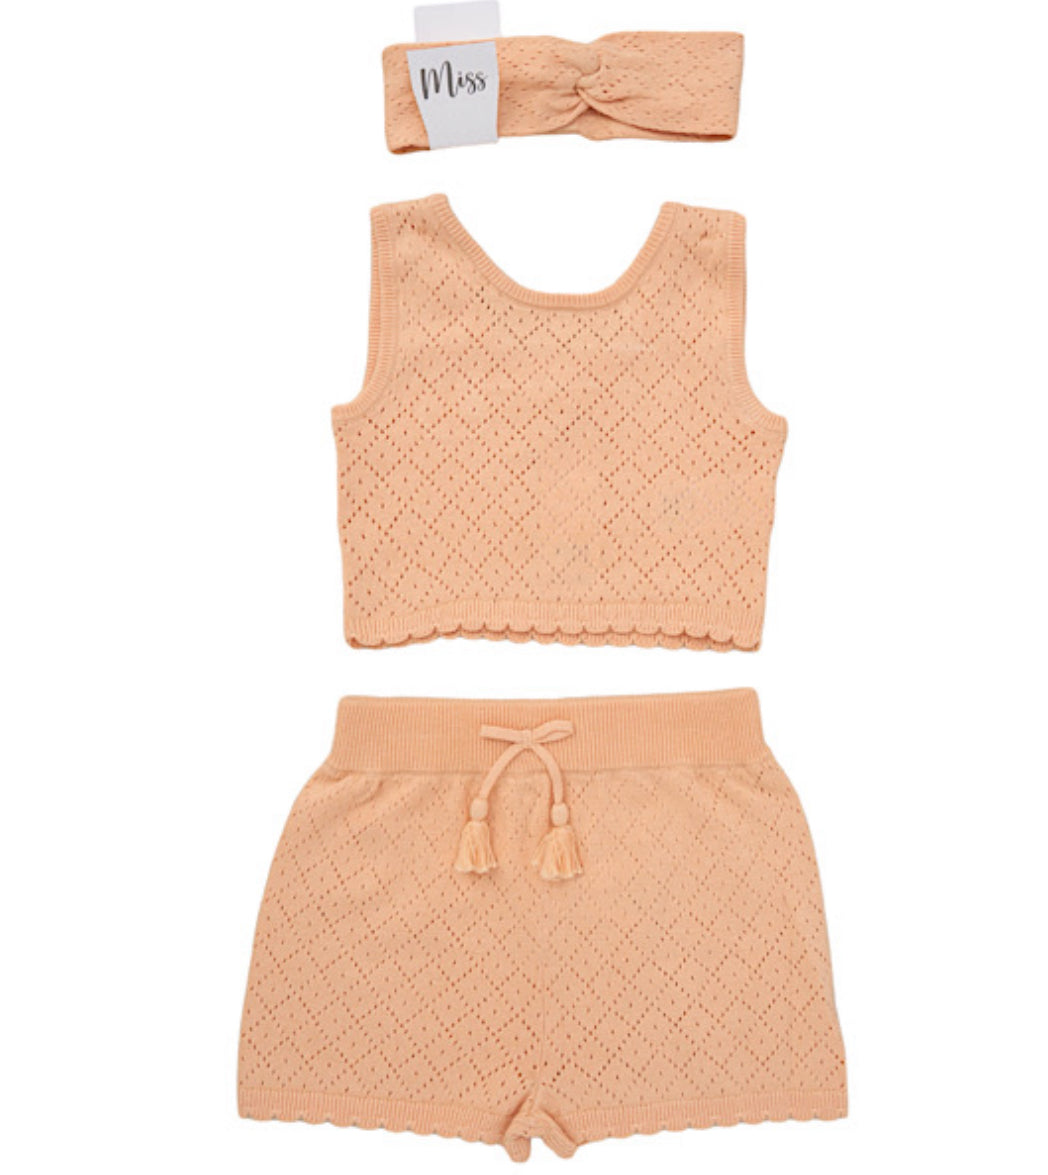 Girls Knitted Orange Shorts Set